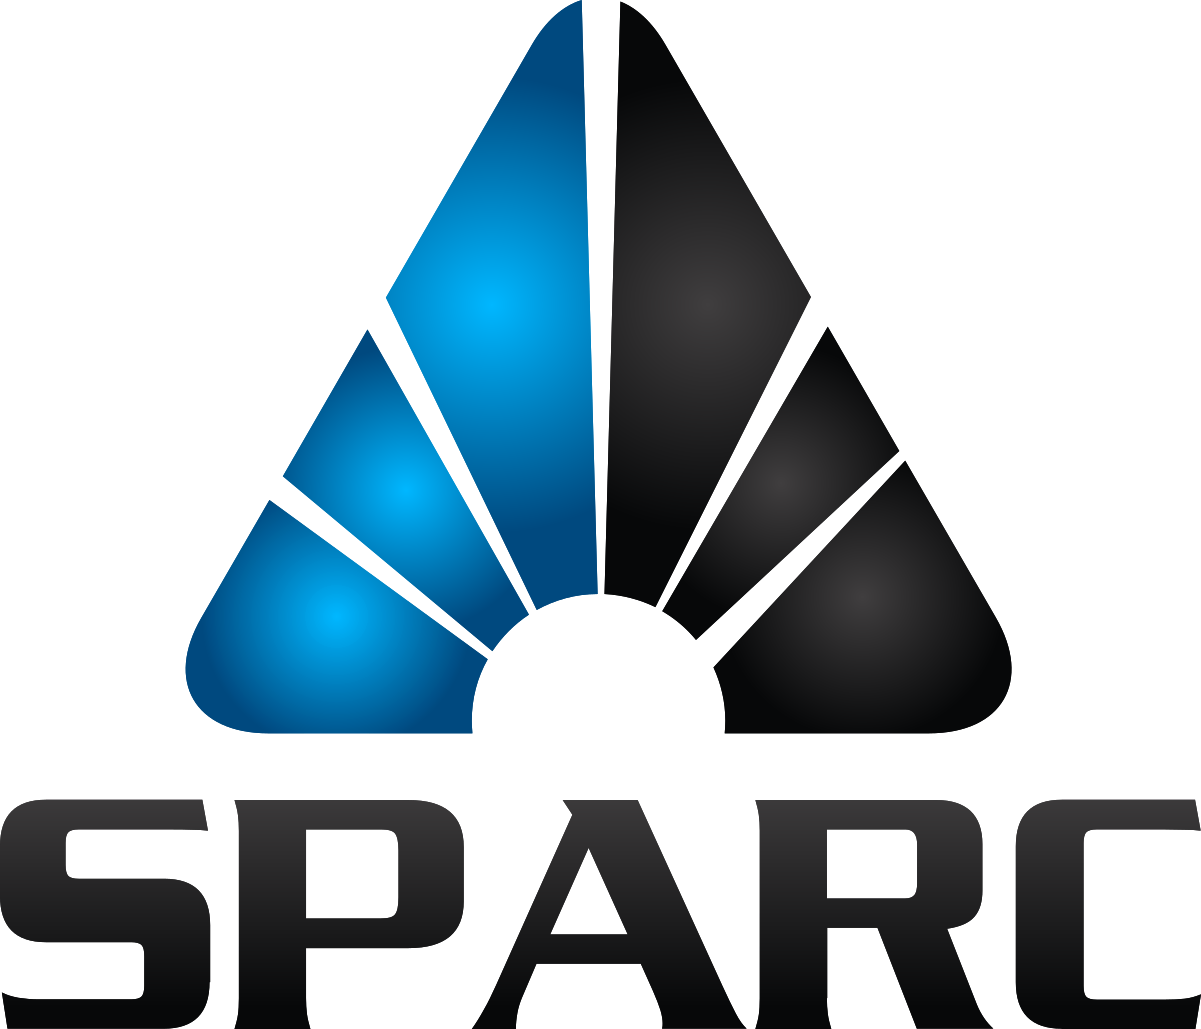 sparc-logo-dark.png